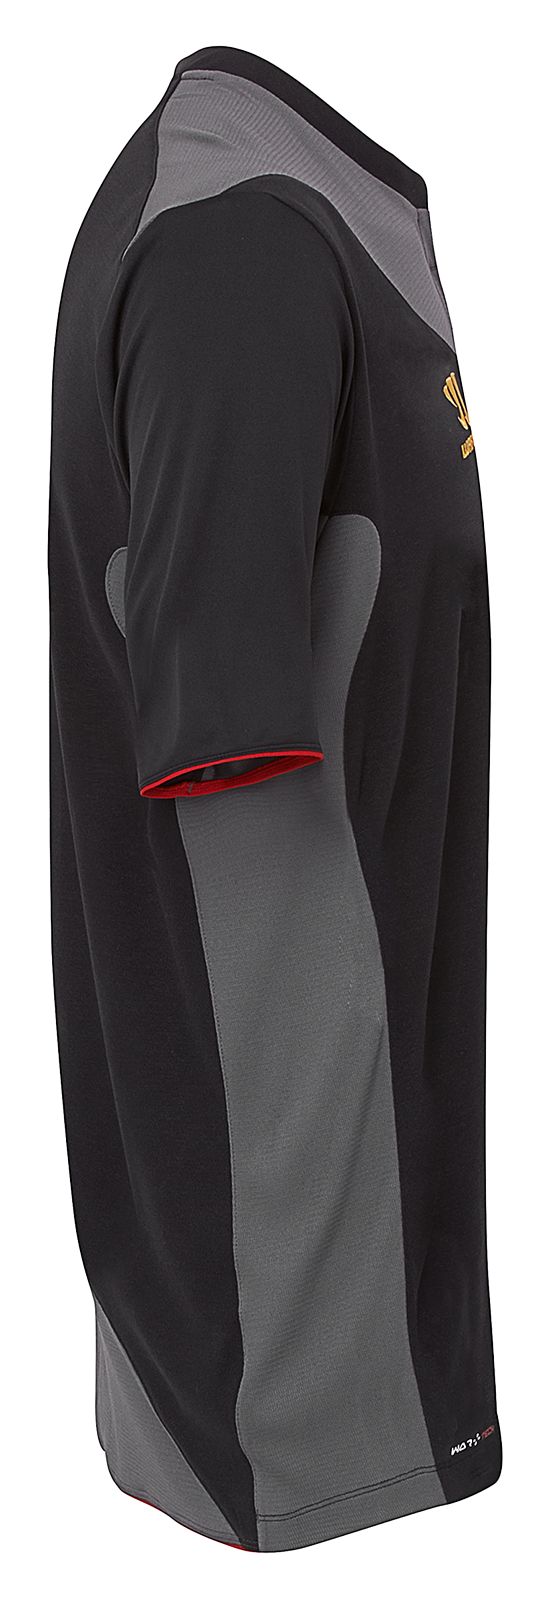 Away Junior Short Sleeve Jersey 2012/13, Black with Raven Grey image number 2